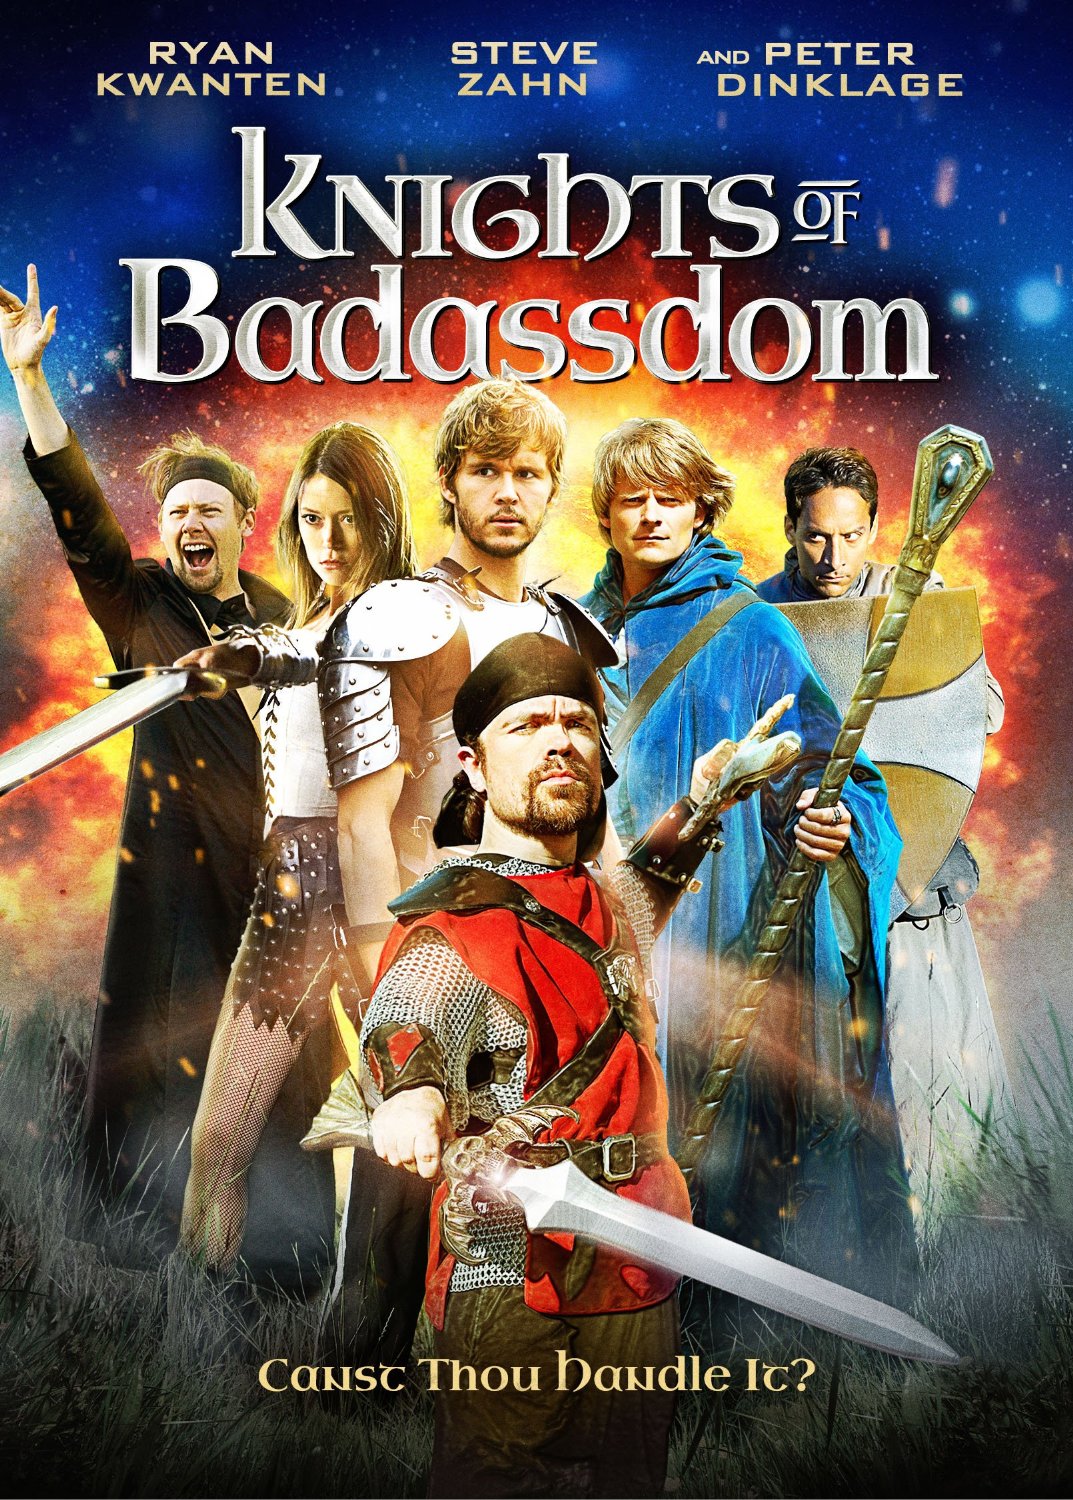 Knights_of_Badassdom_art.jpg